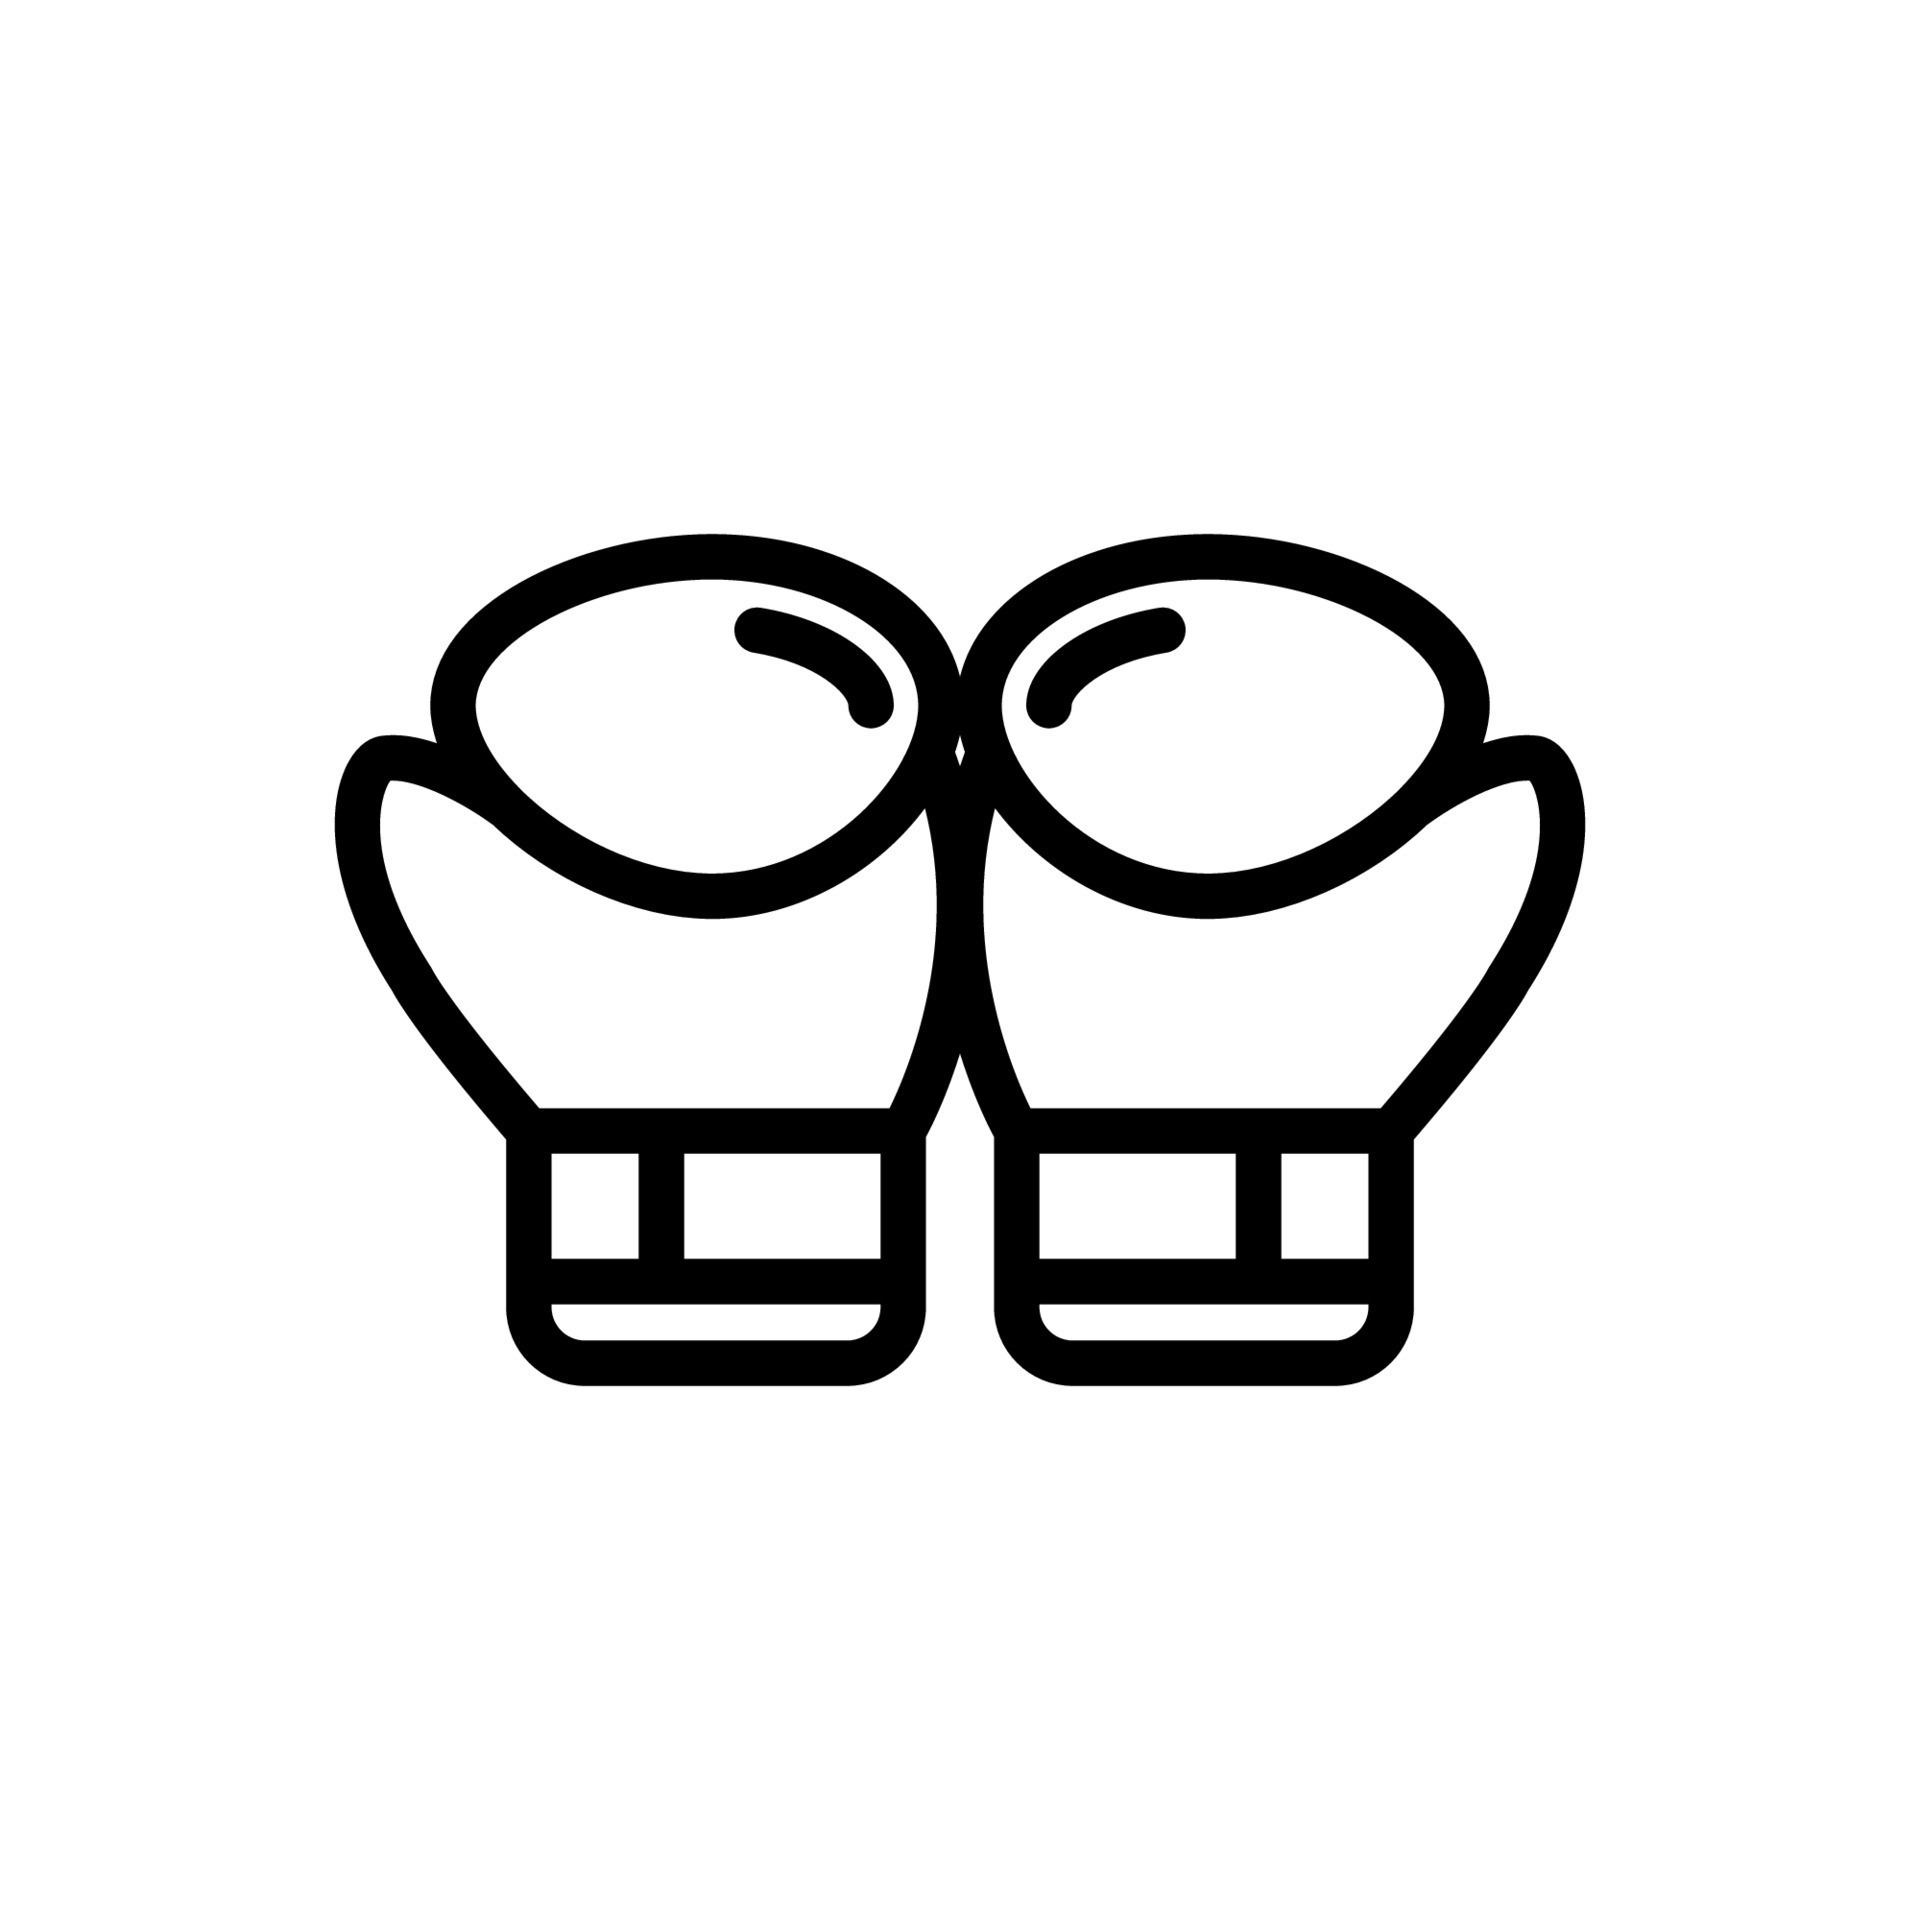 Boxing gloves icon. Sports equipment design illustration